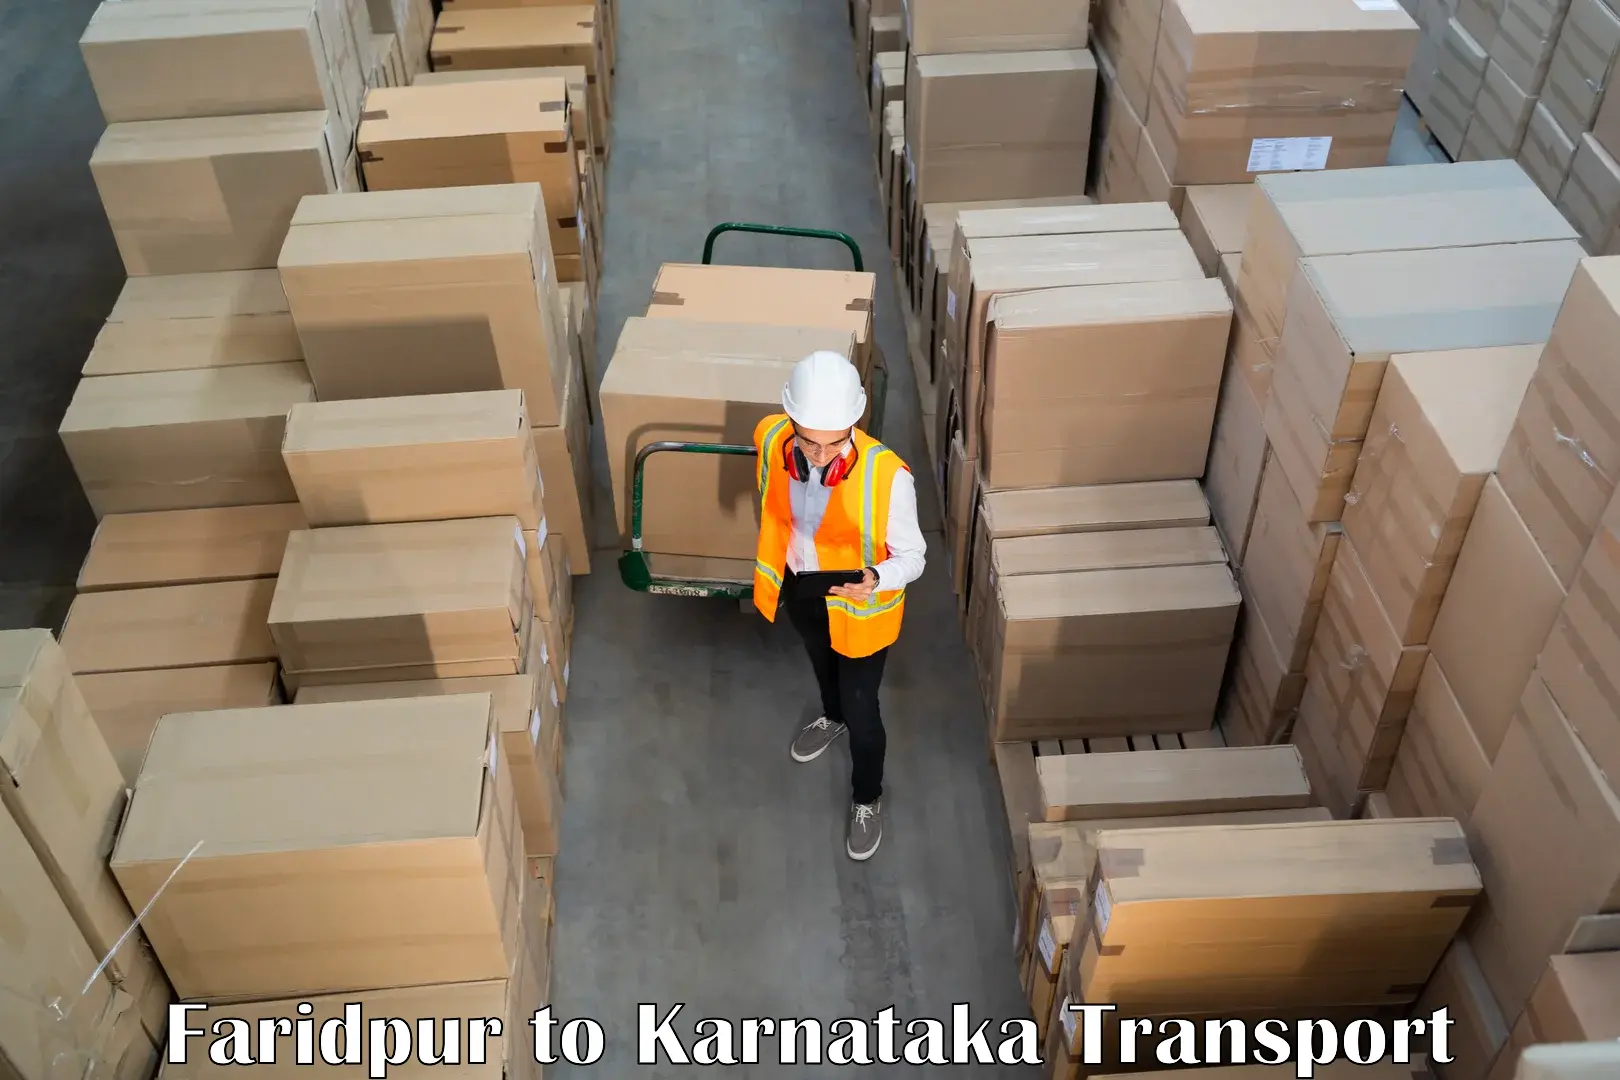 Truck transport companies in India Faridpur to Karnataka